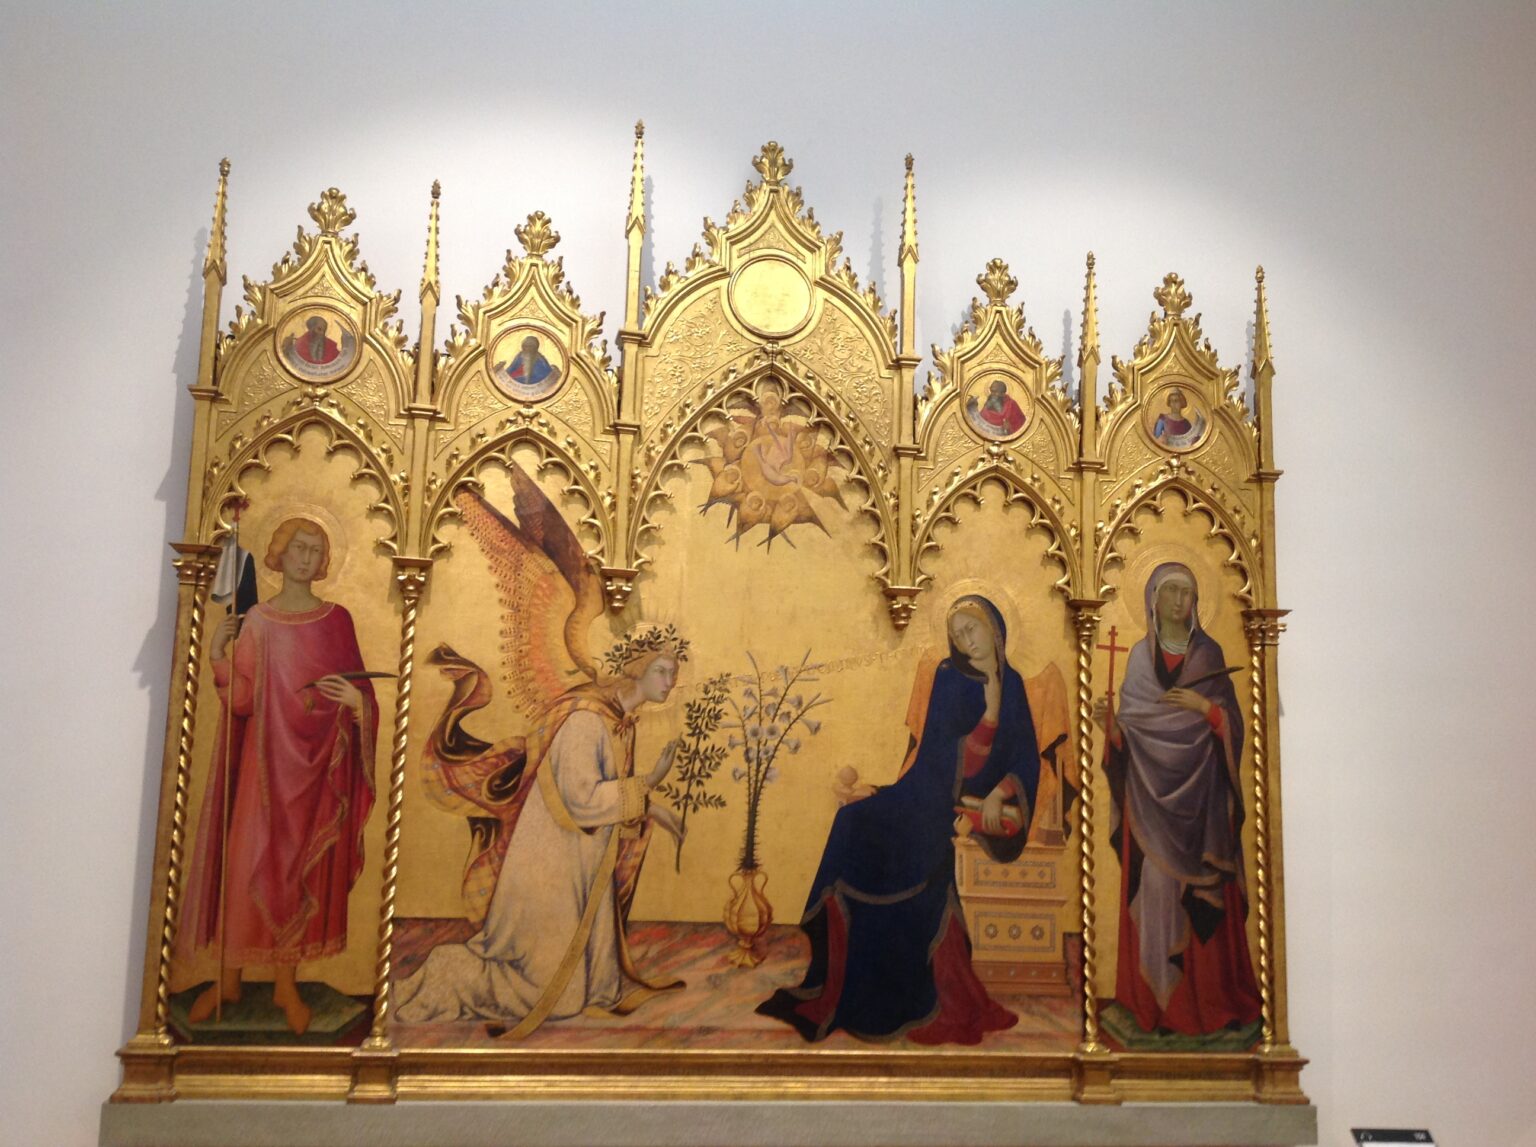 Religious art of the Uffizi